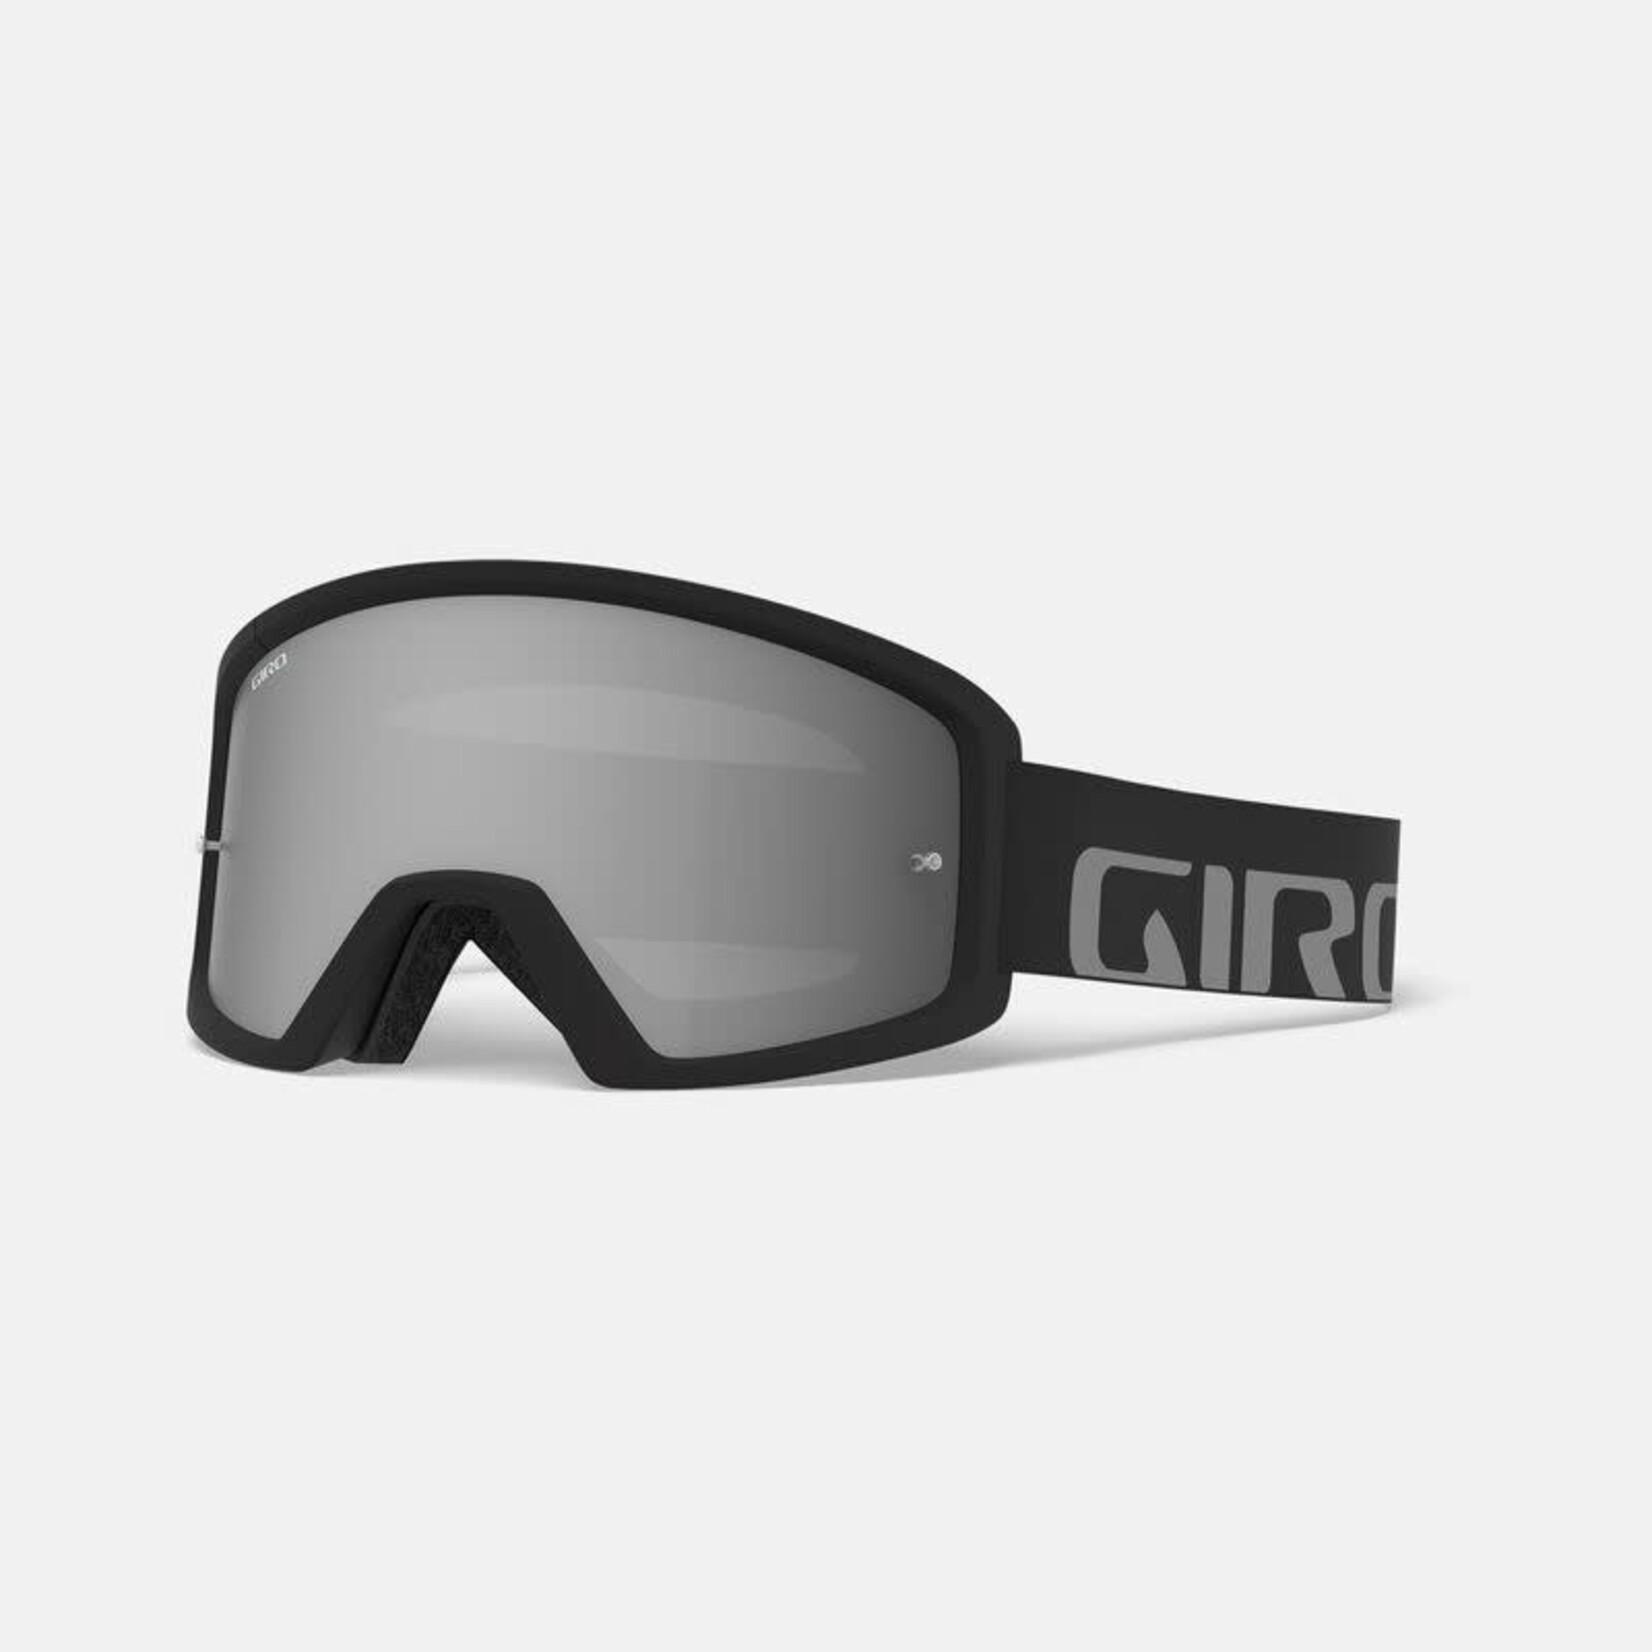 Giro Giro Blok MTB Goggles Black/Grey/Smoke